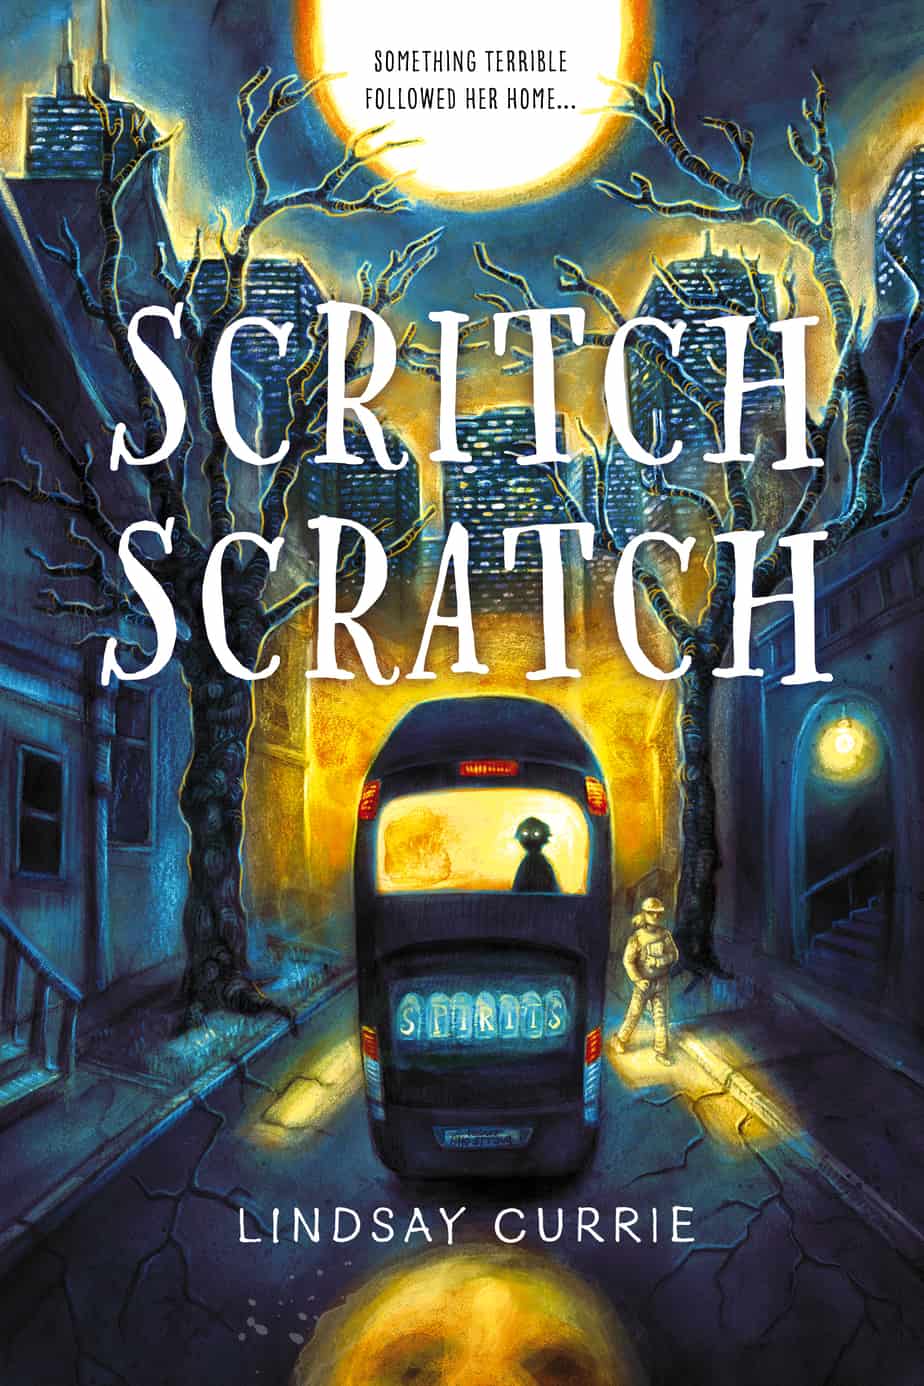 Scratch Scratch by Lindsay Currie